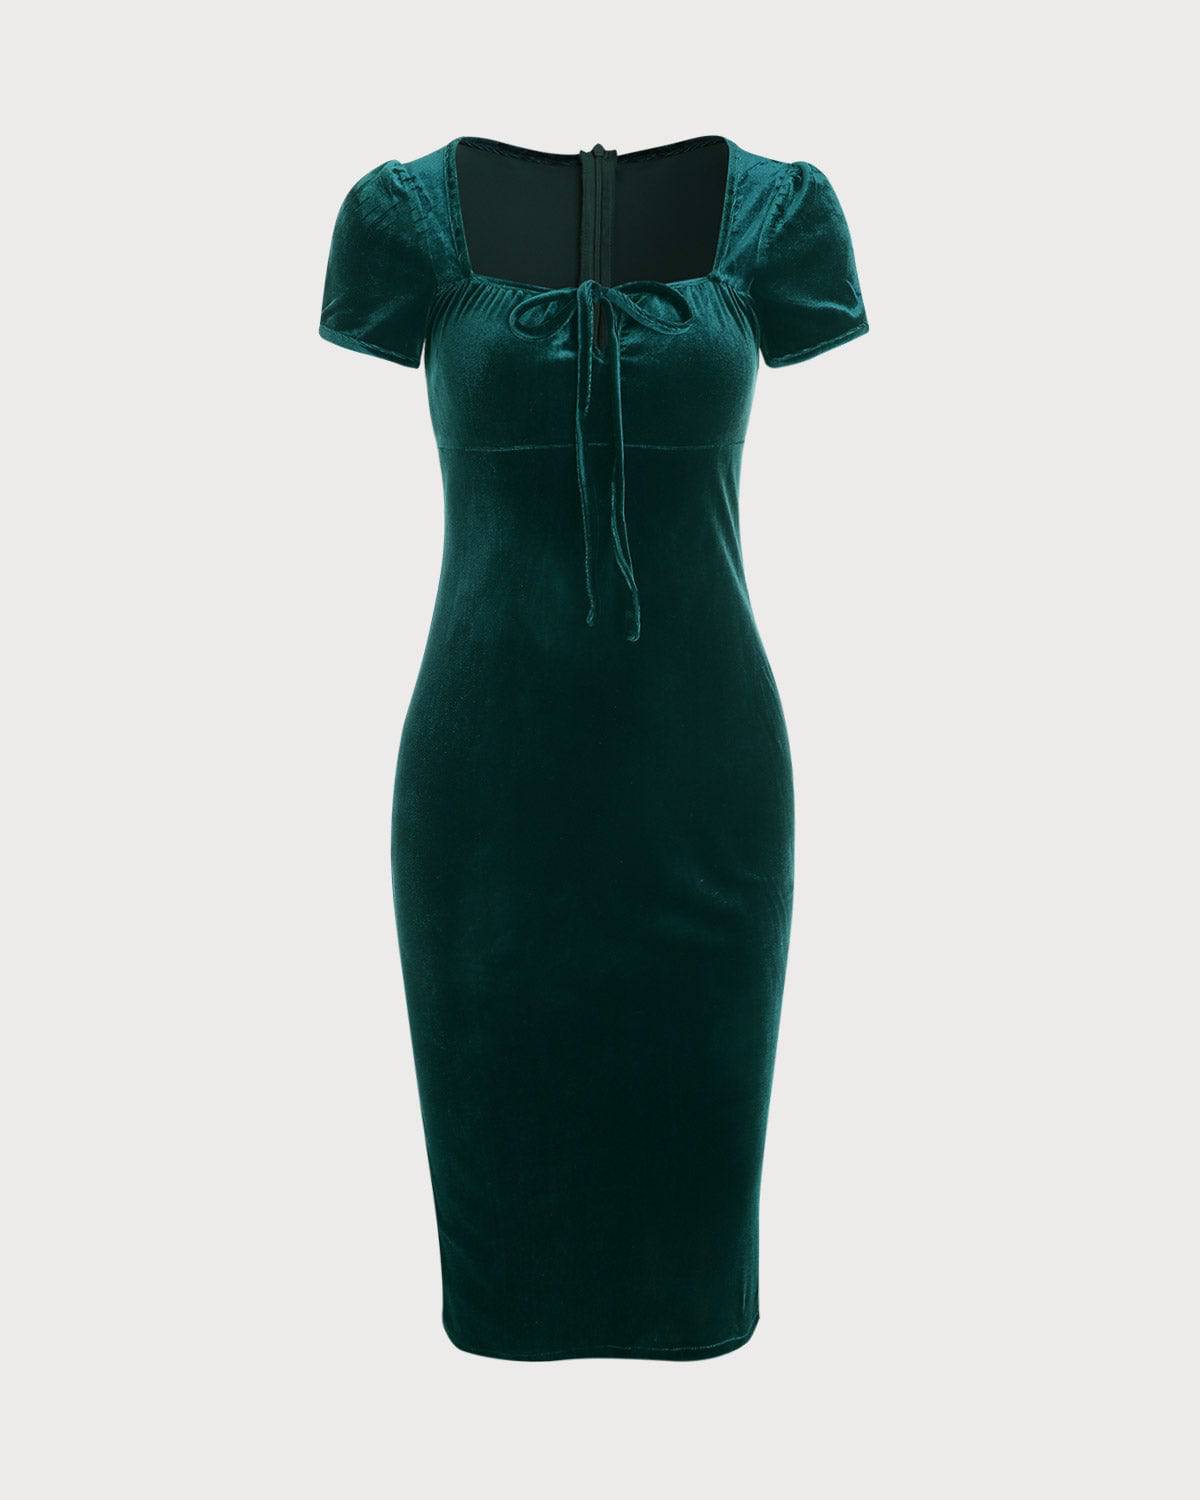 Rihoas Women's Velvet Party Dress Long Sleeve Crew Neck Bodycon Midi Dress, Dark Green / XL